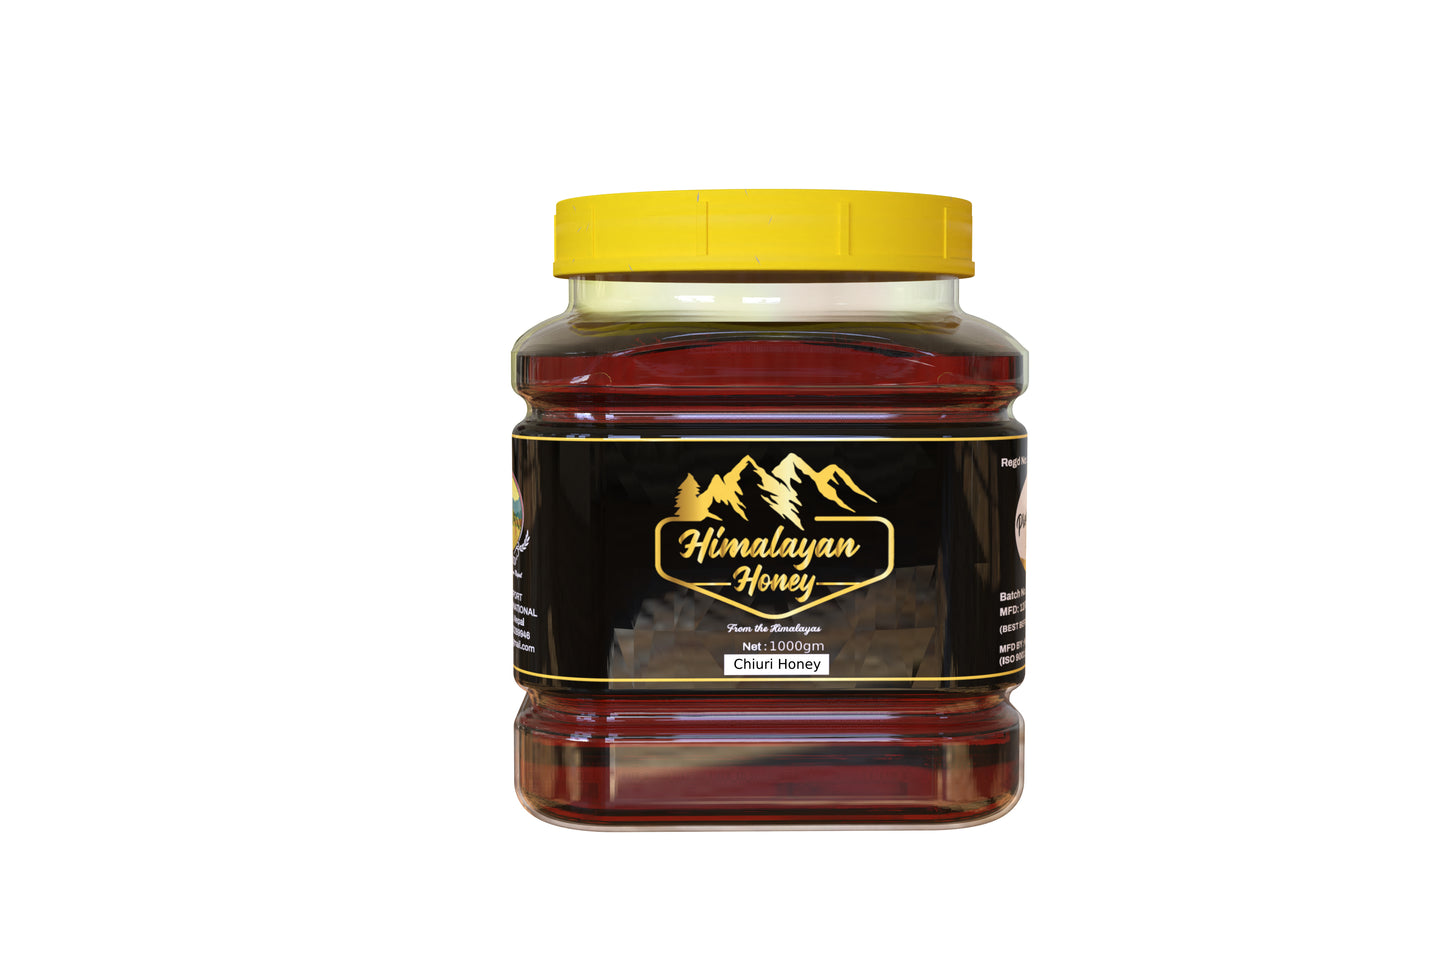 Butter Tree (Chiuri) Honey Himalayan premium 1000g Nepal